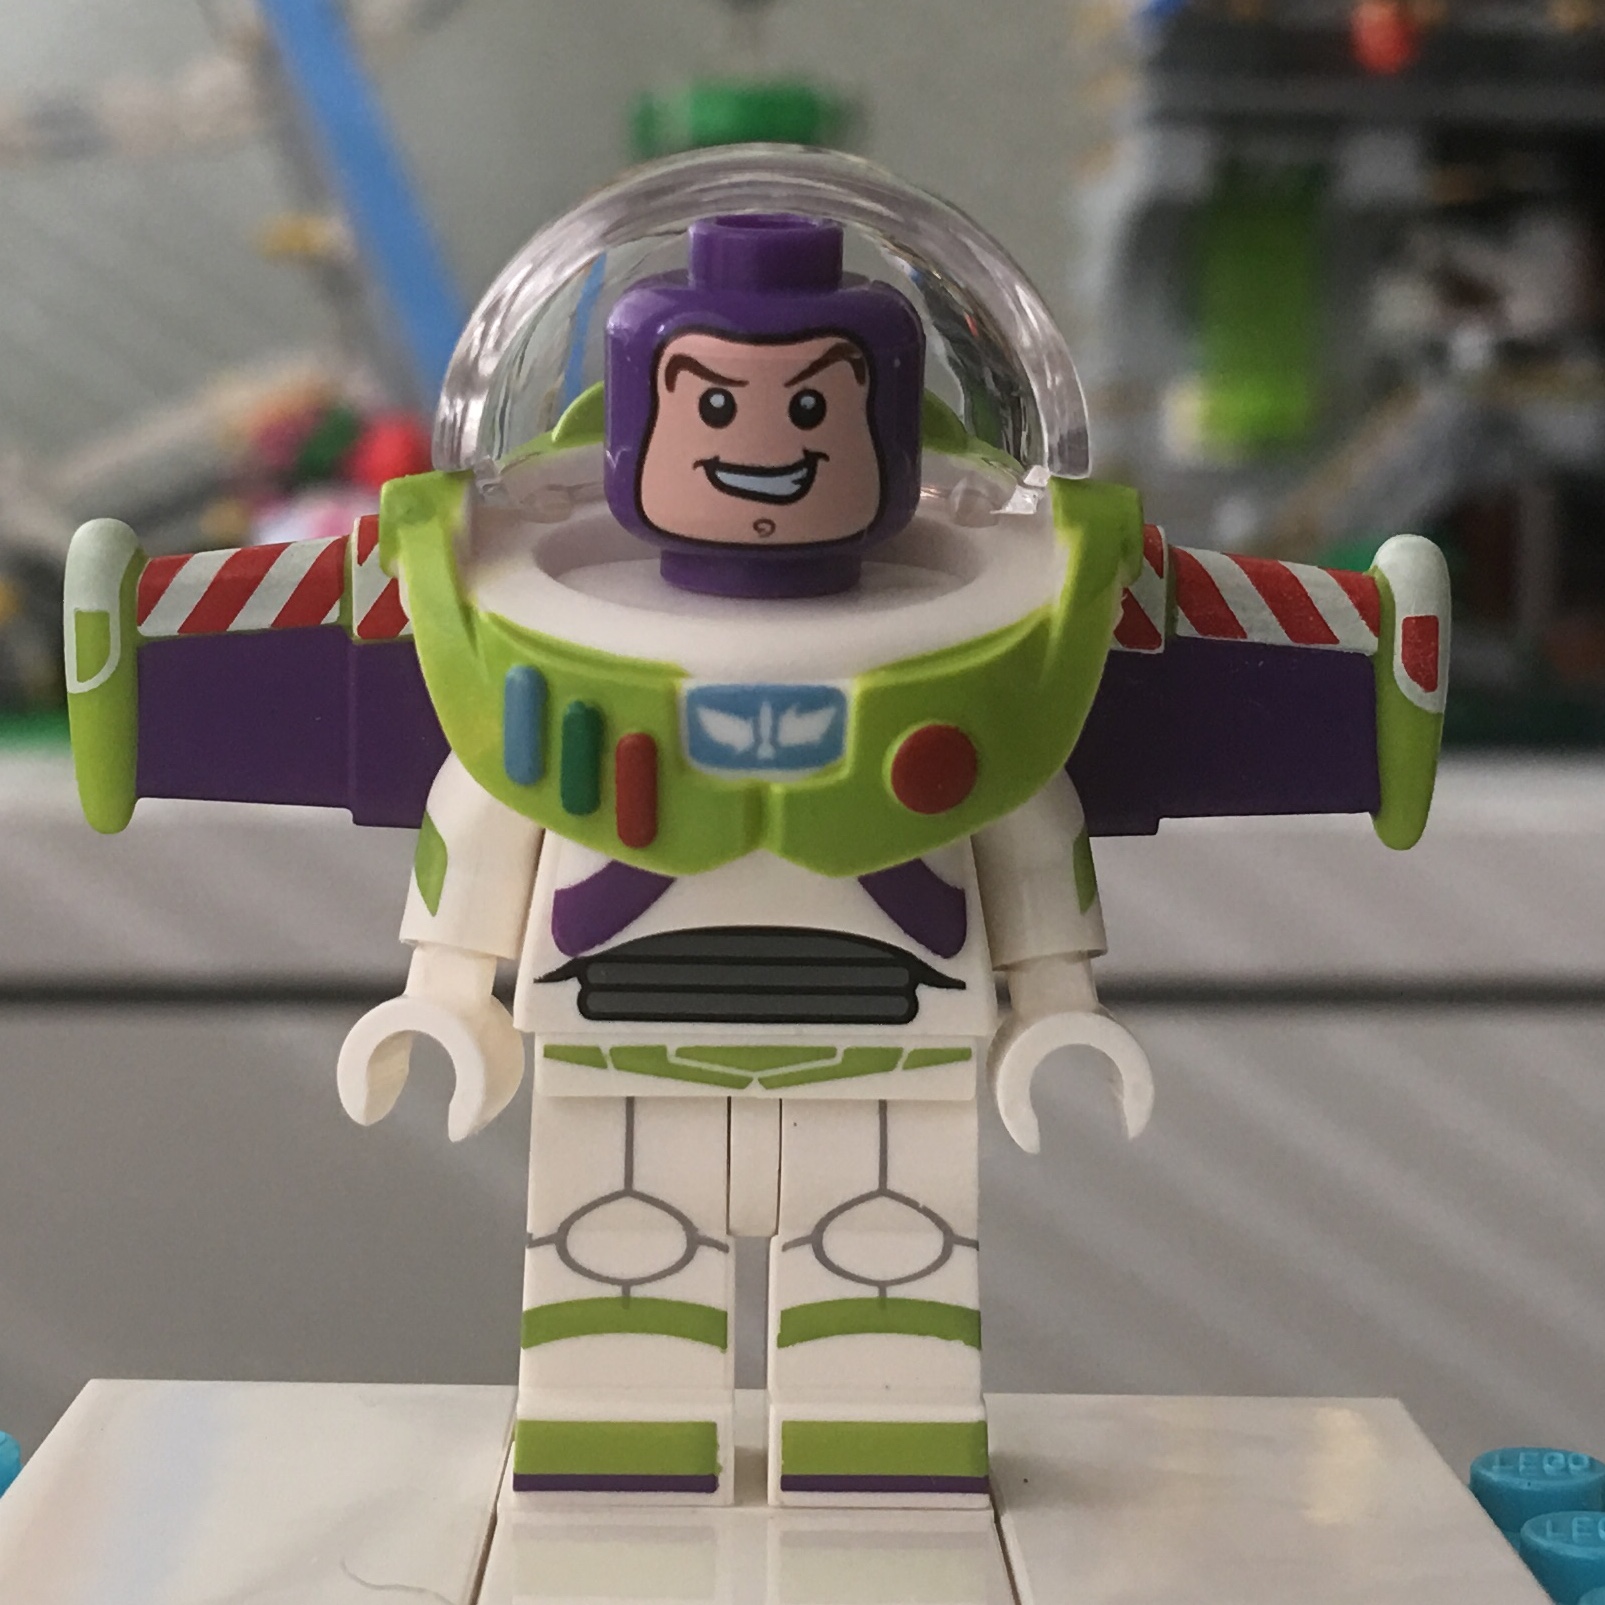 Lego Disney Buzz Lightyear Minifigure 71012 Series 1 Toy Story Light Year Toy 